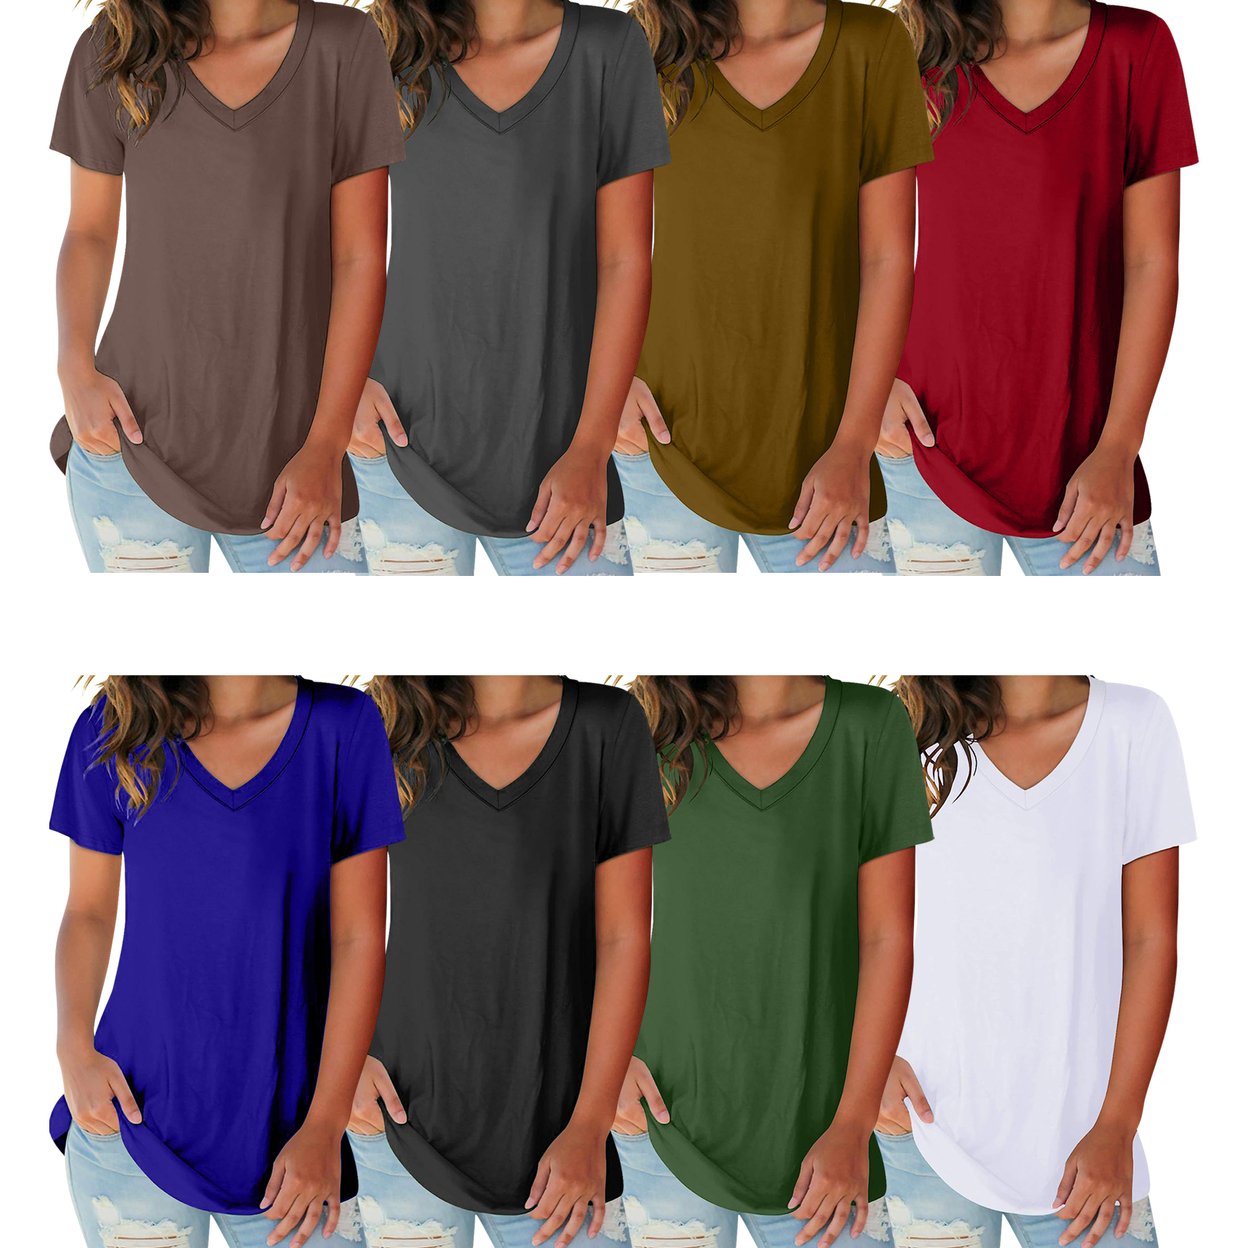 3-Pack: Women's Ultra Soft Smooth Cotton Blend Basic V-Neck Short Sleeve Shirts - Black, White, Green, Small